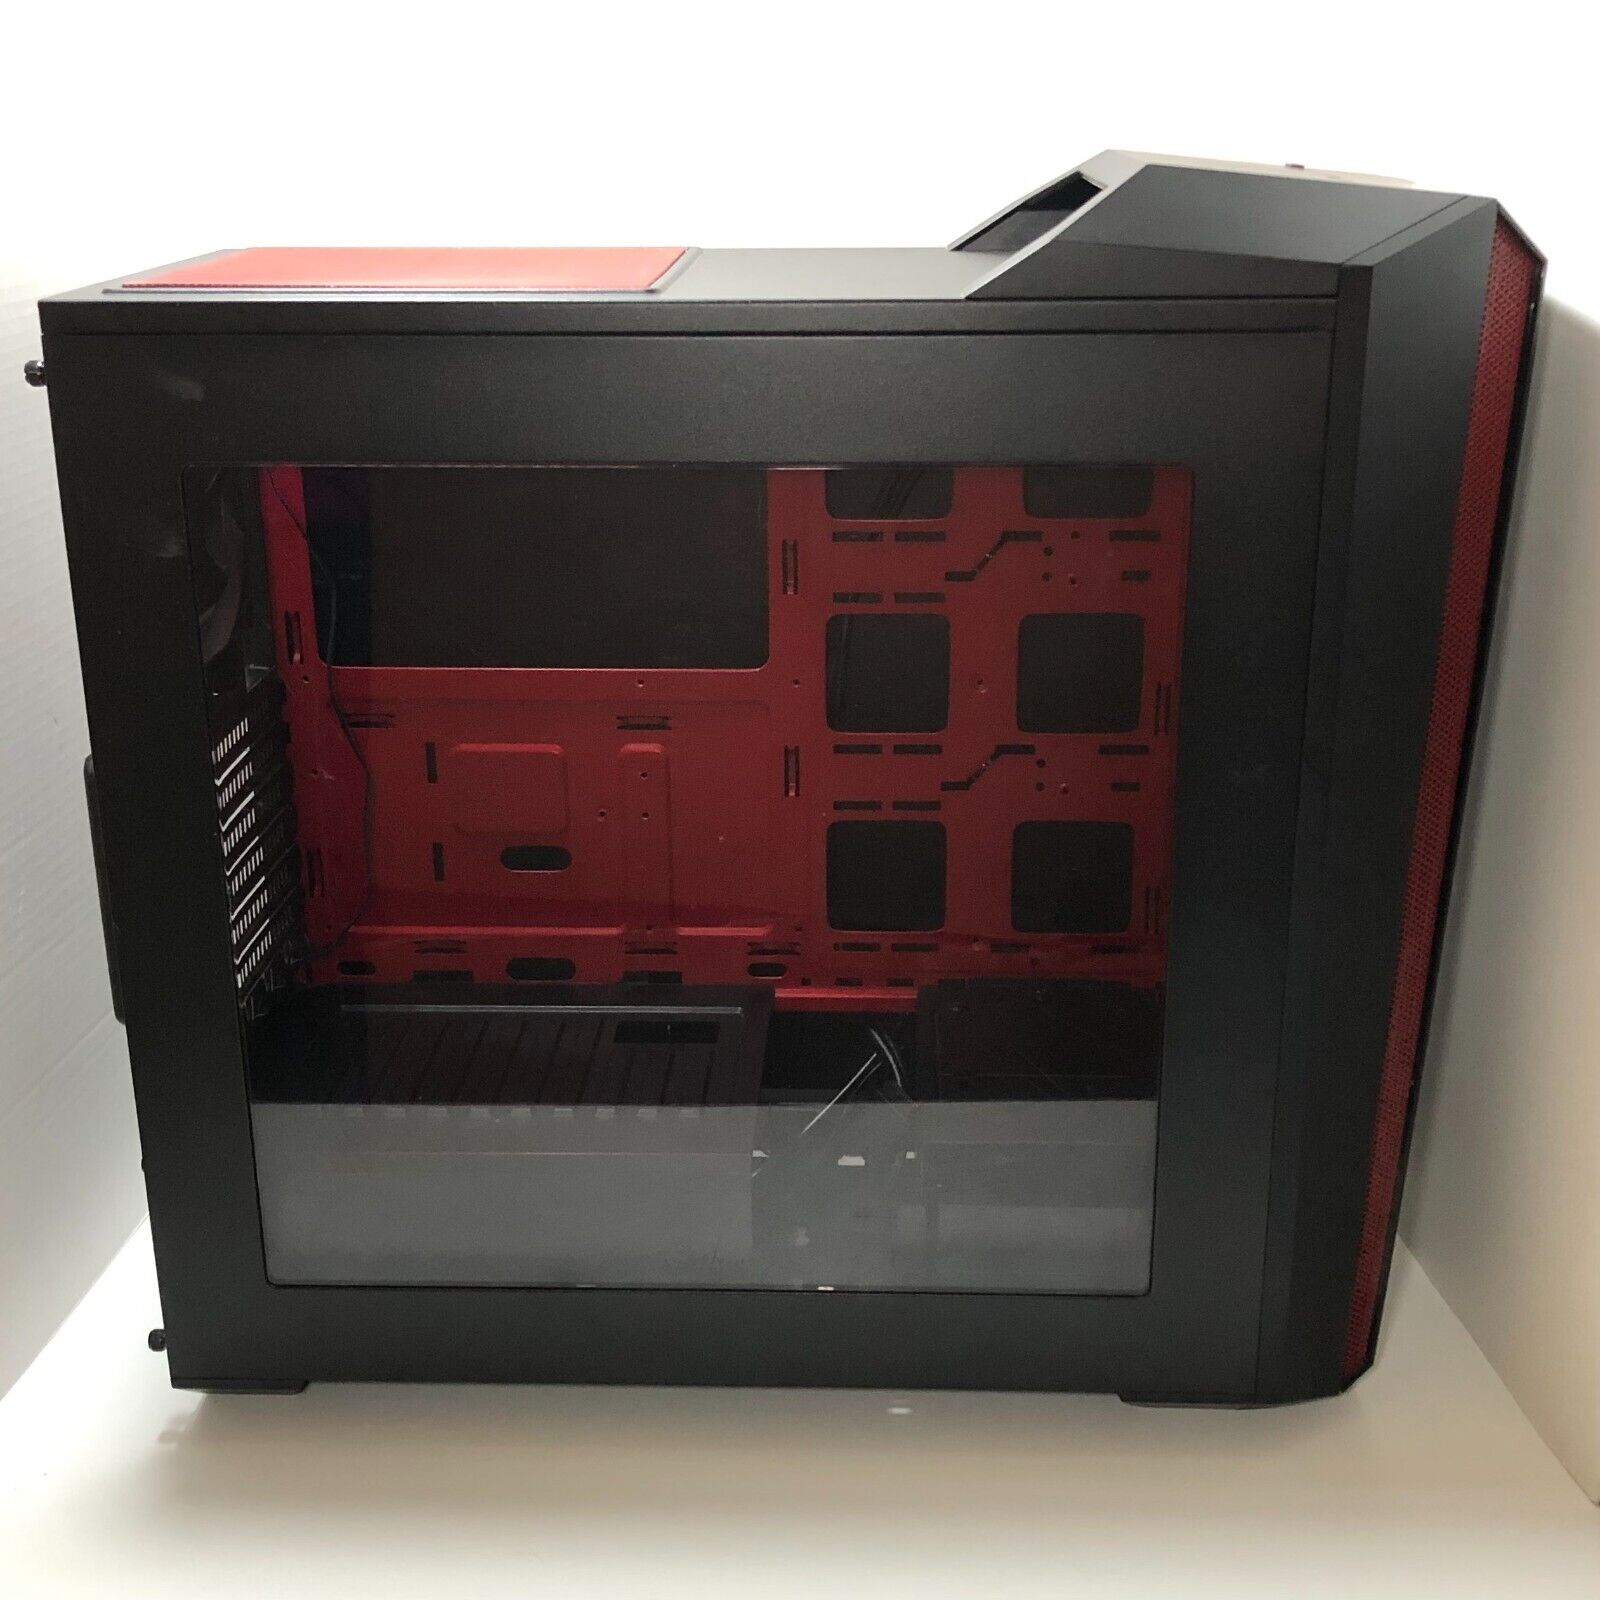 Cooler Master MCX-B5S3T-RWNN 5t Dual-Tone Gaming ATX Mid-Tower Case - Red/Black